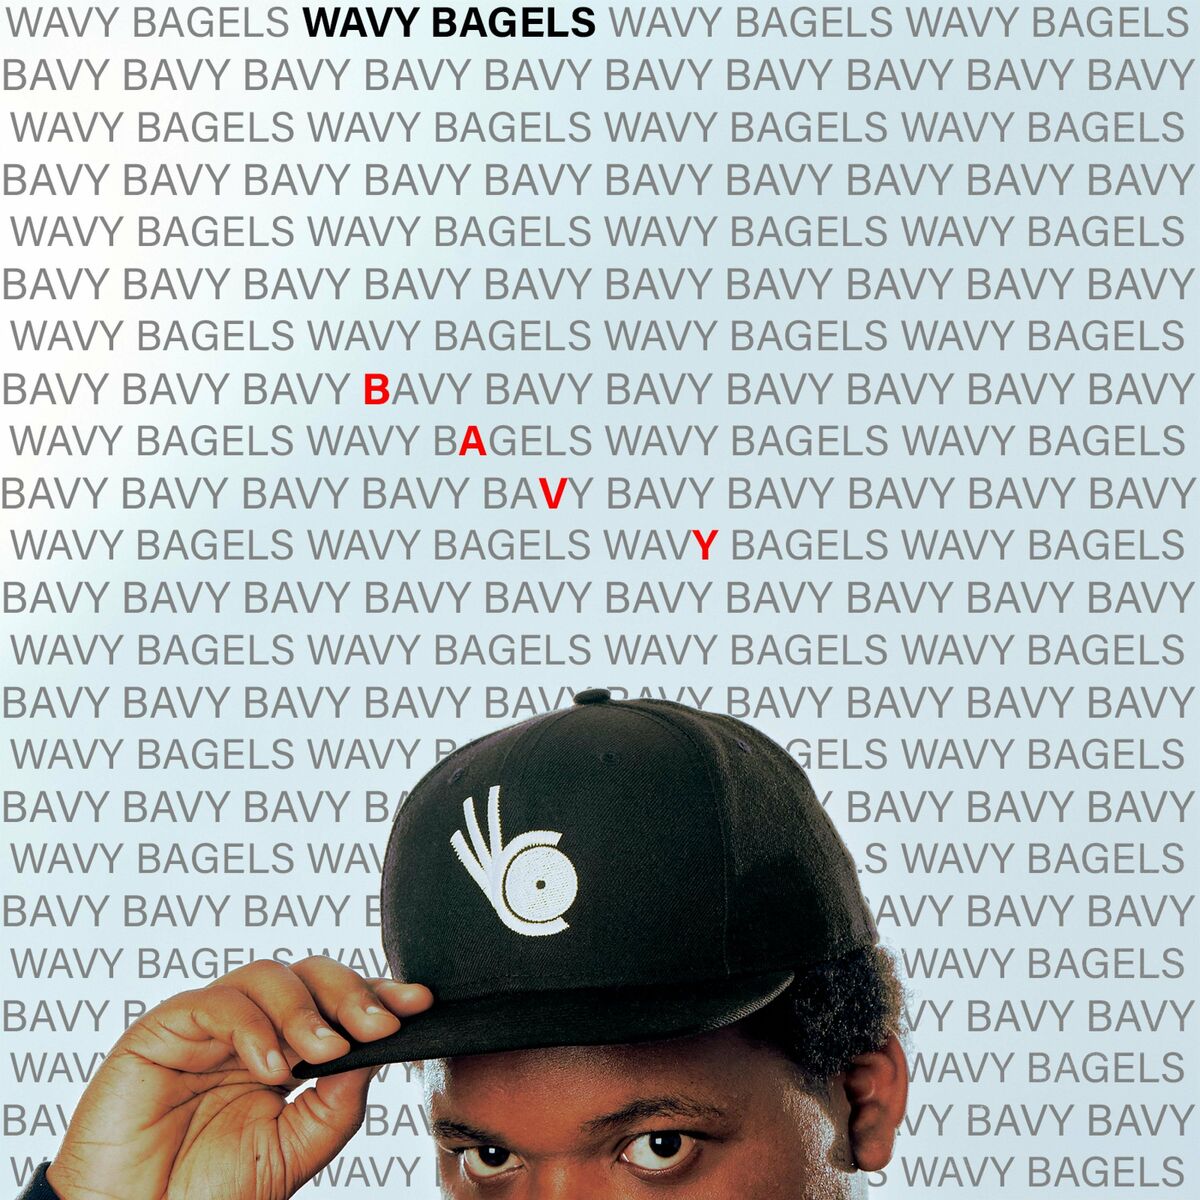 Wavy Bagels-BAVY-WEB-2022-KNOWN